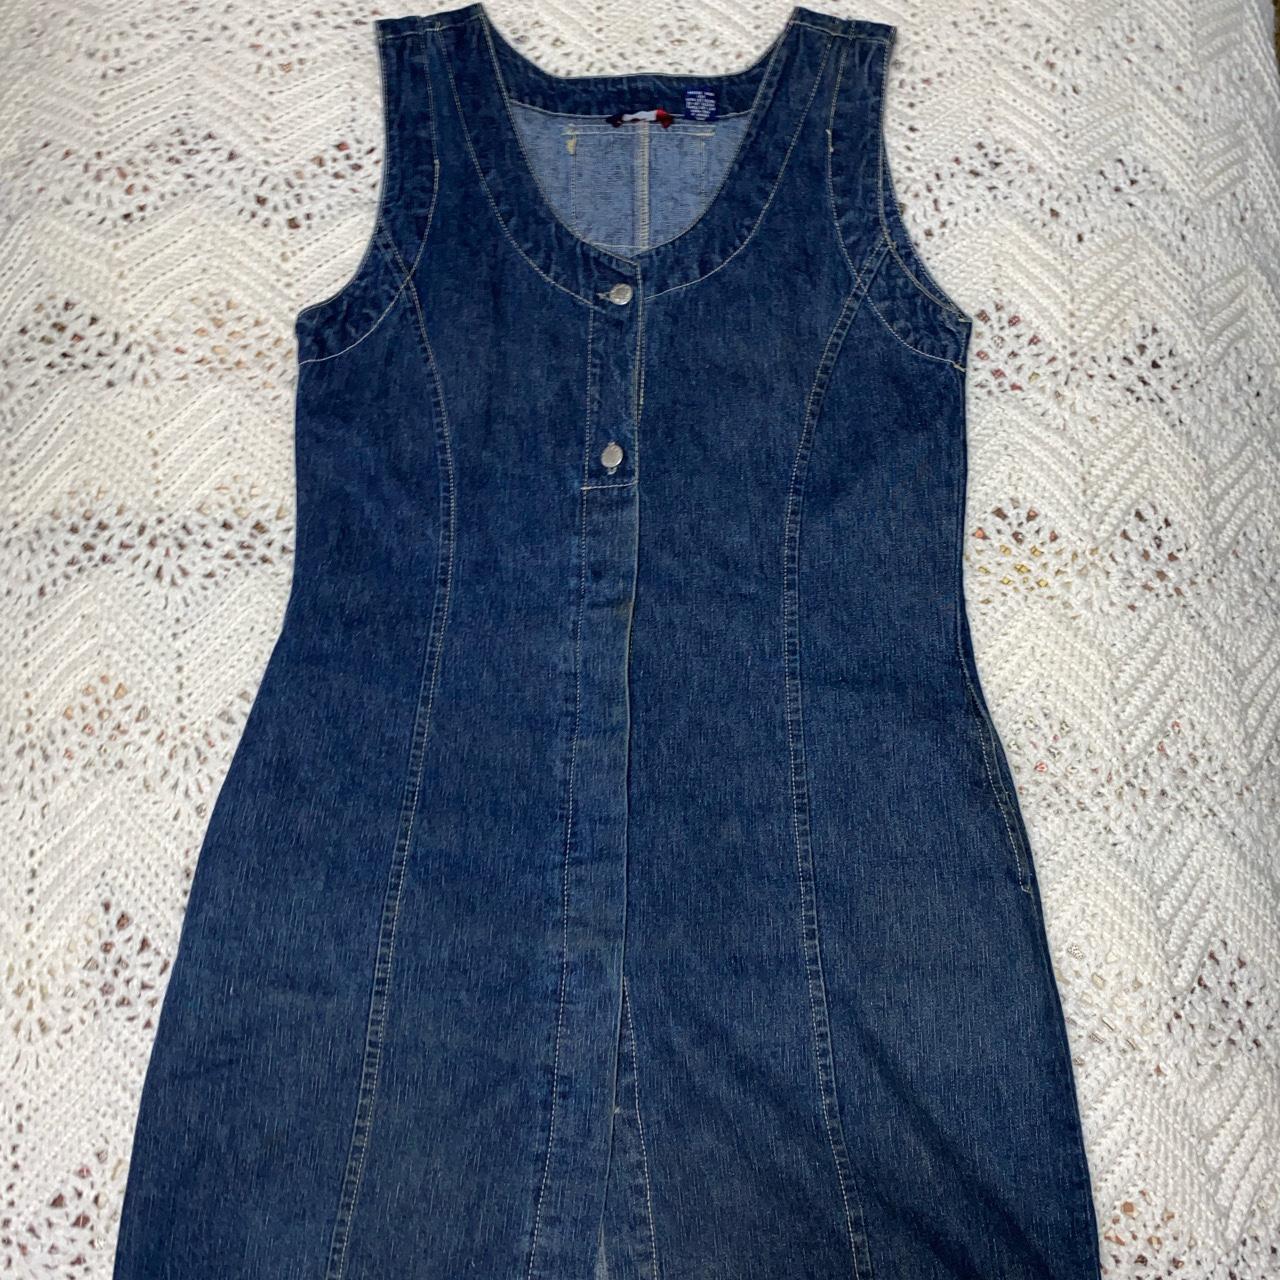 Vintage jean schoolteacher dress / great for layering - Depop